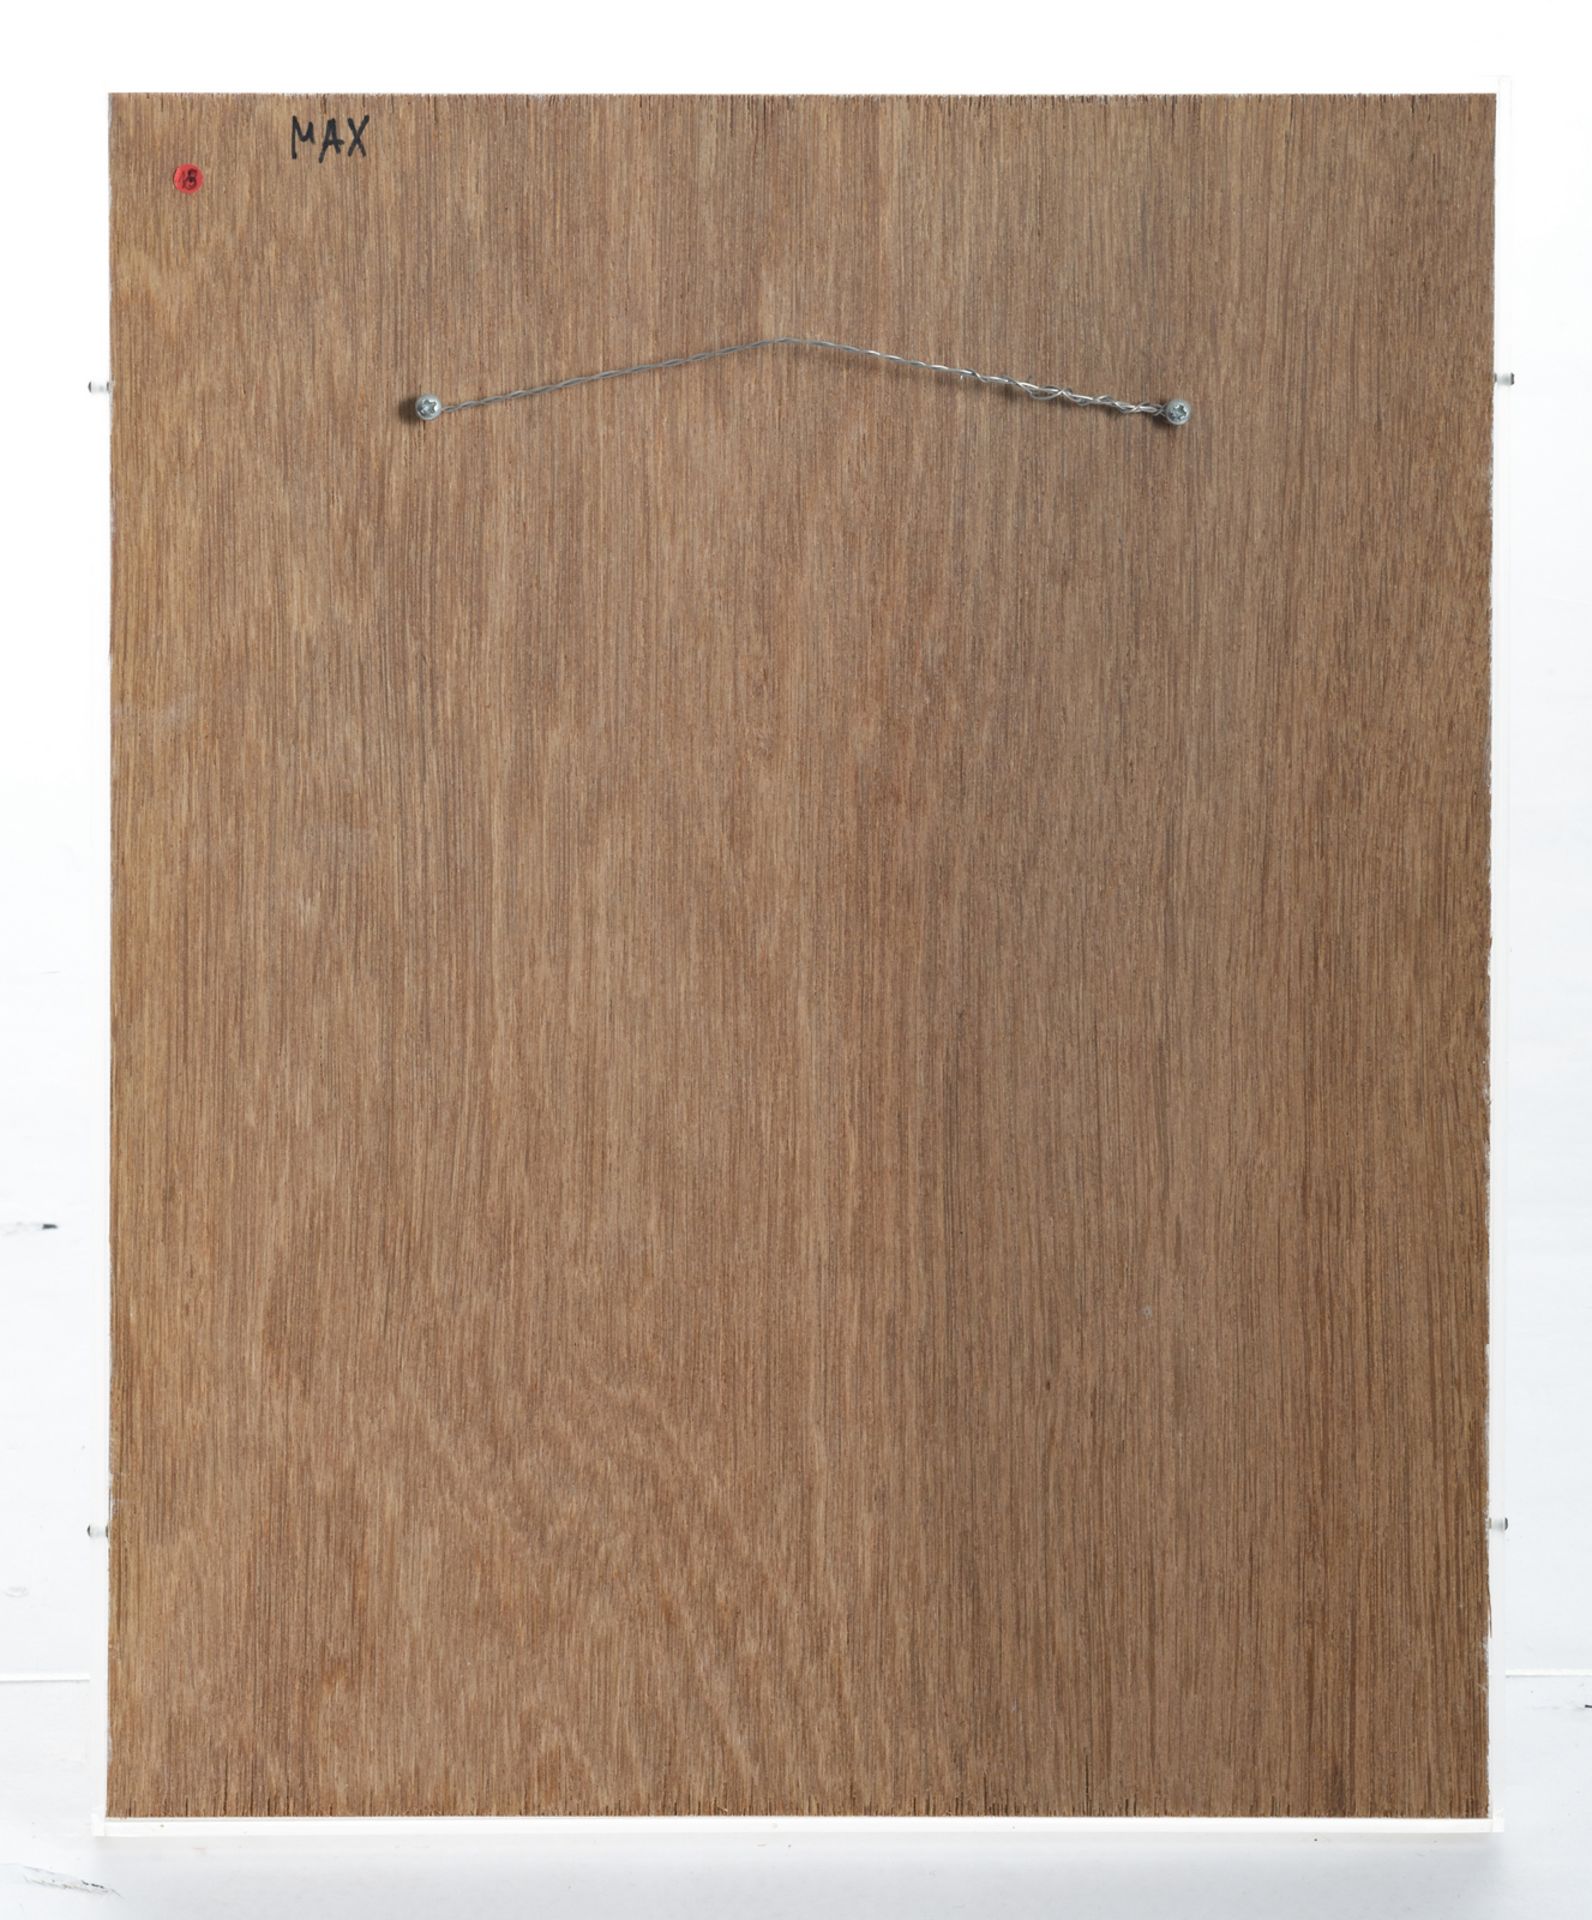 Michiels D., 'Max', oil on zinc, in a plexi box, 41 x 51 cm - Image 4 of 5